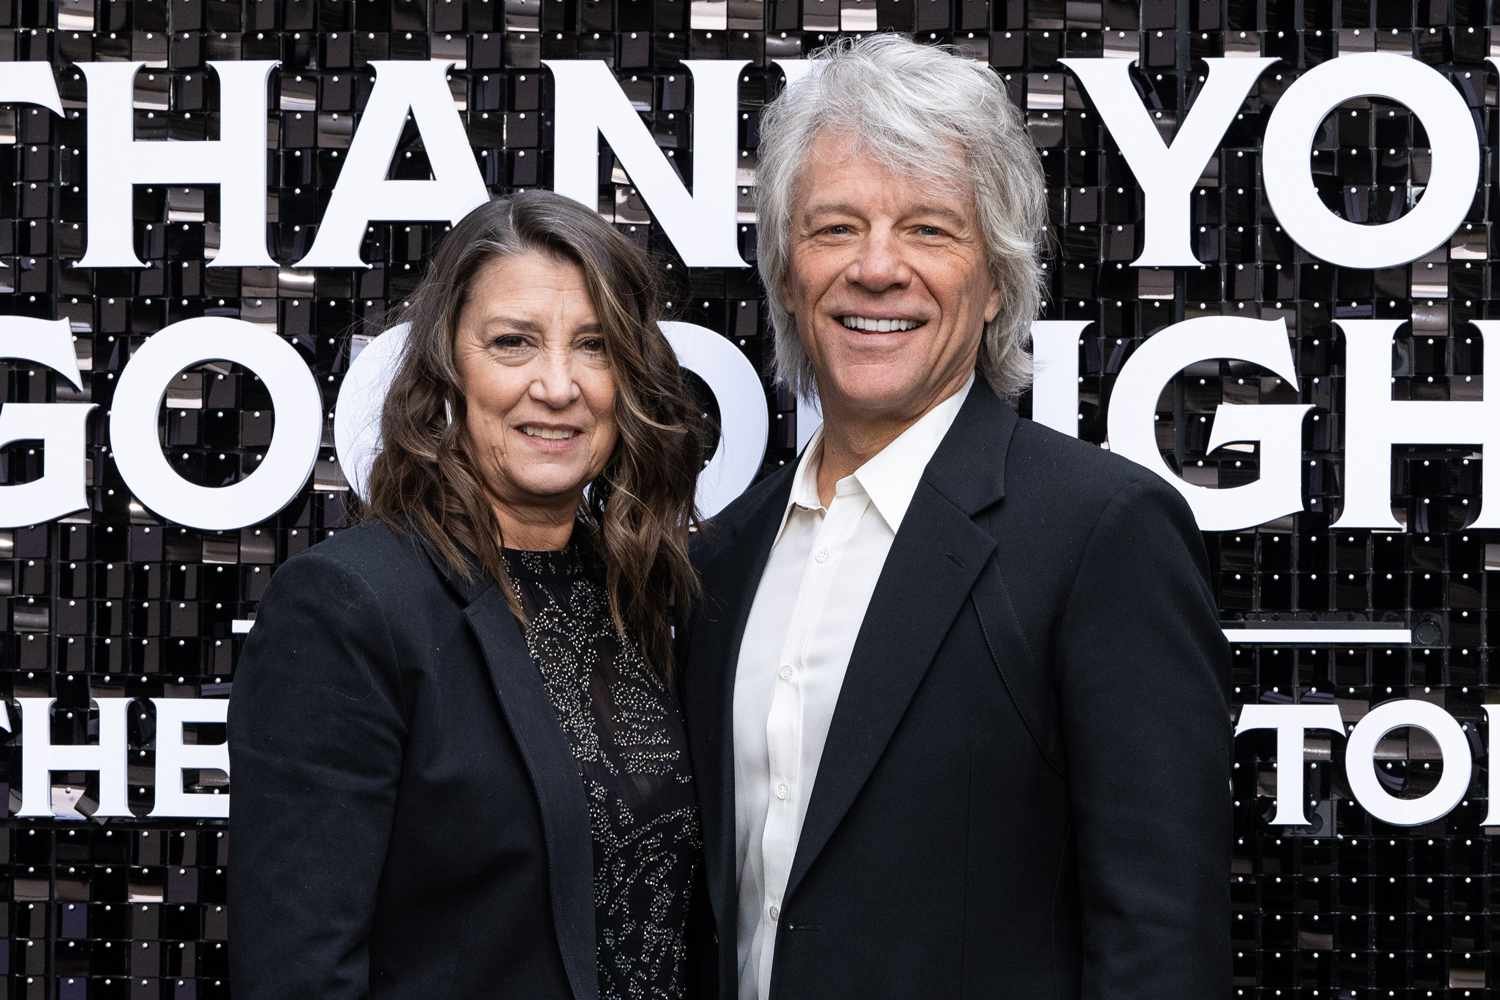 Jon Bon Jovi and his wife